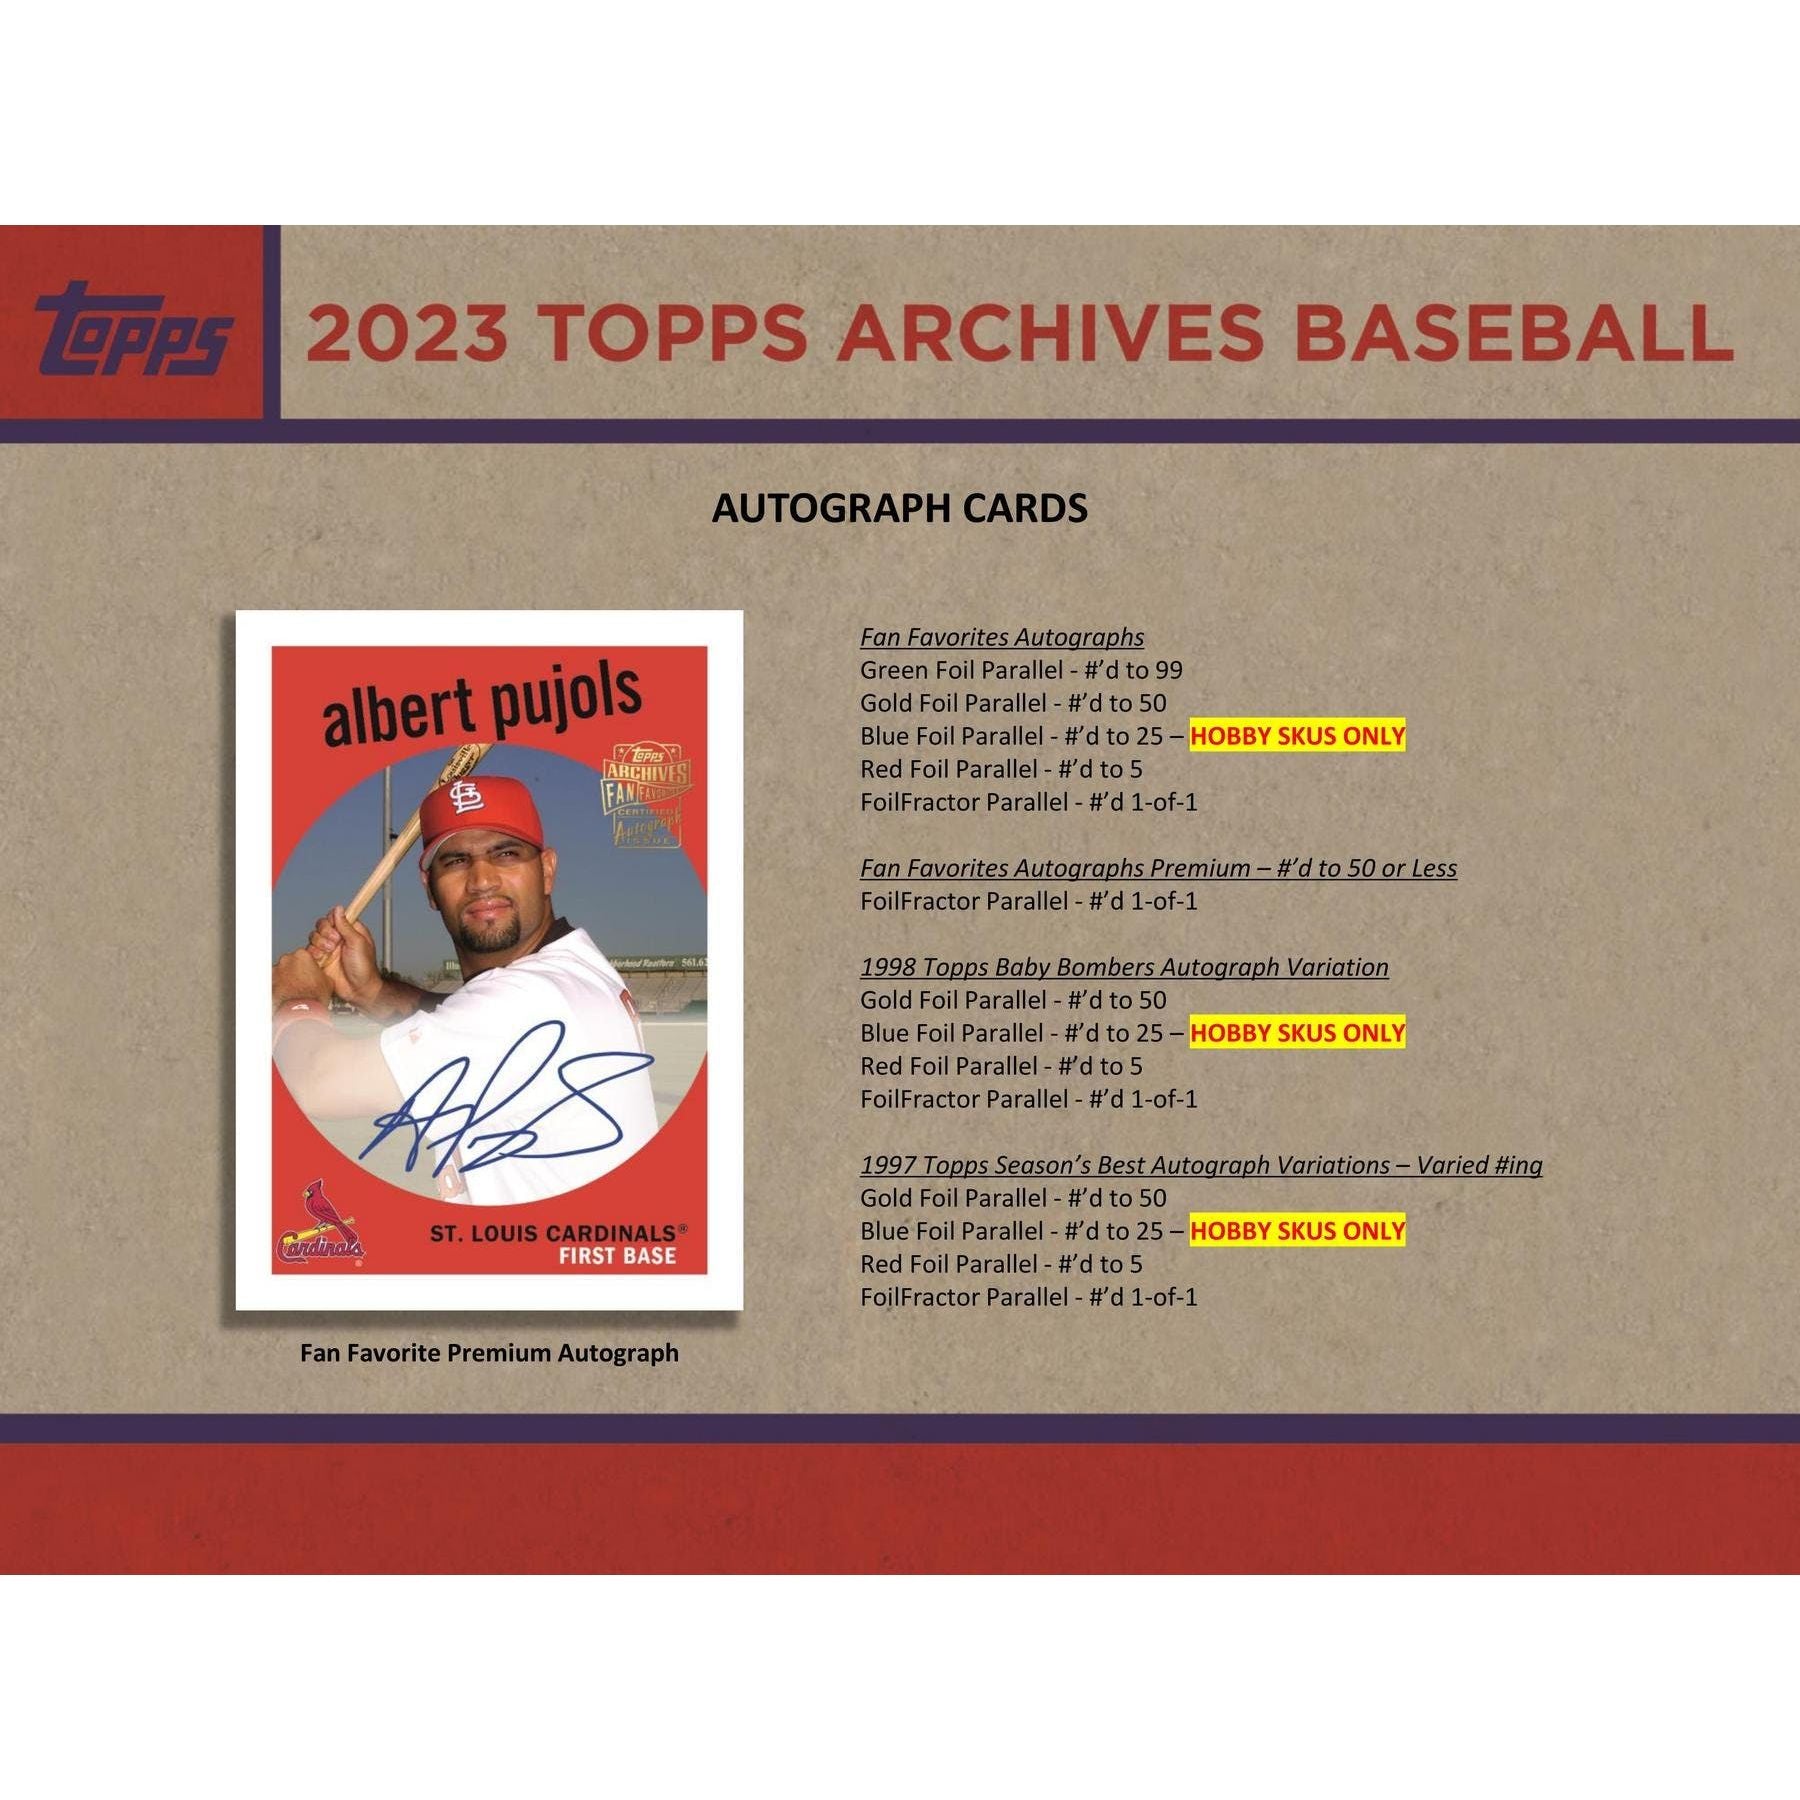 2023 Topps Archives Baseball Hobby Box 887521120376 - King Card Canada